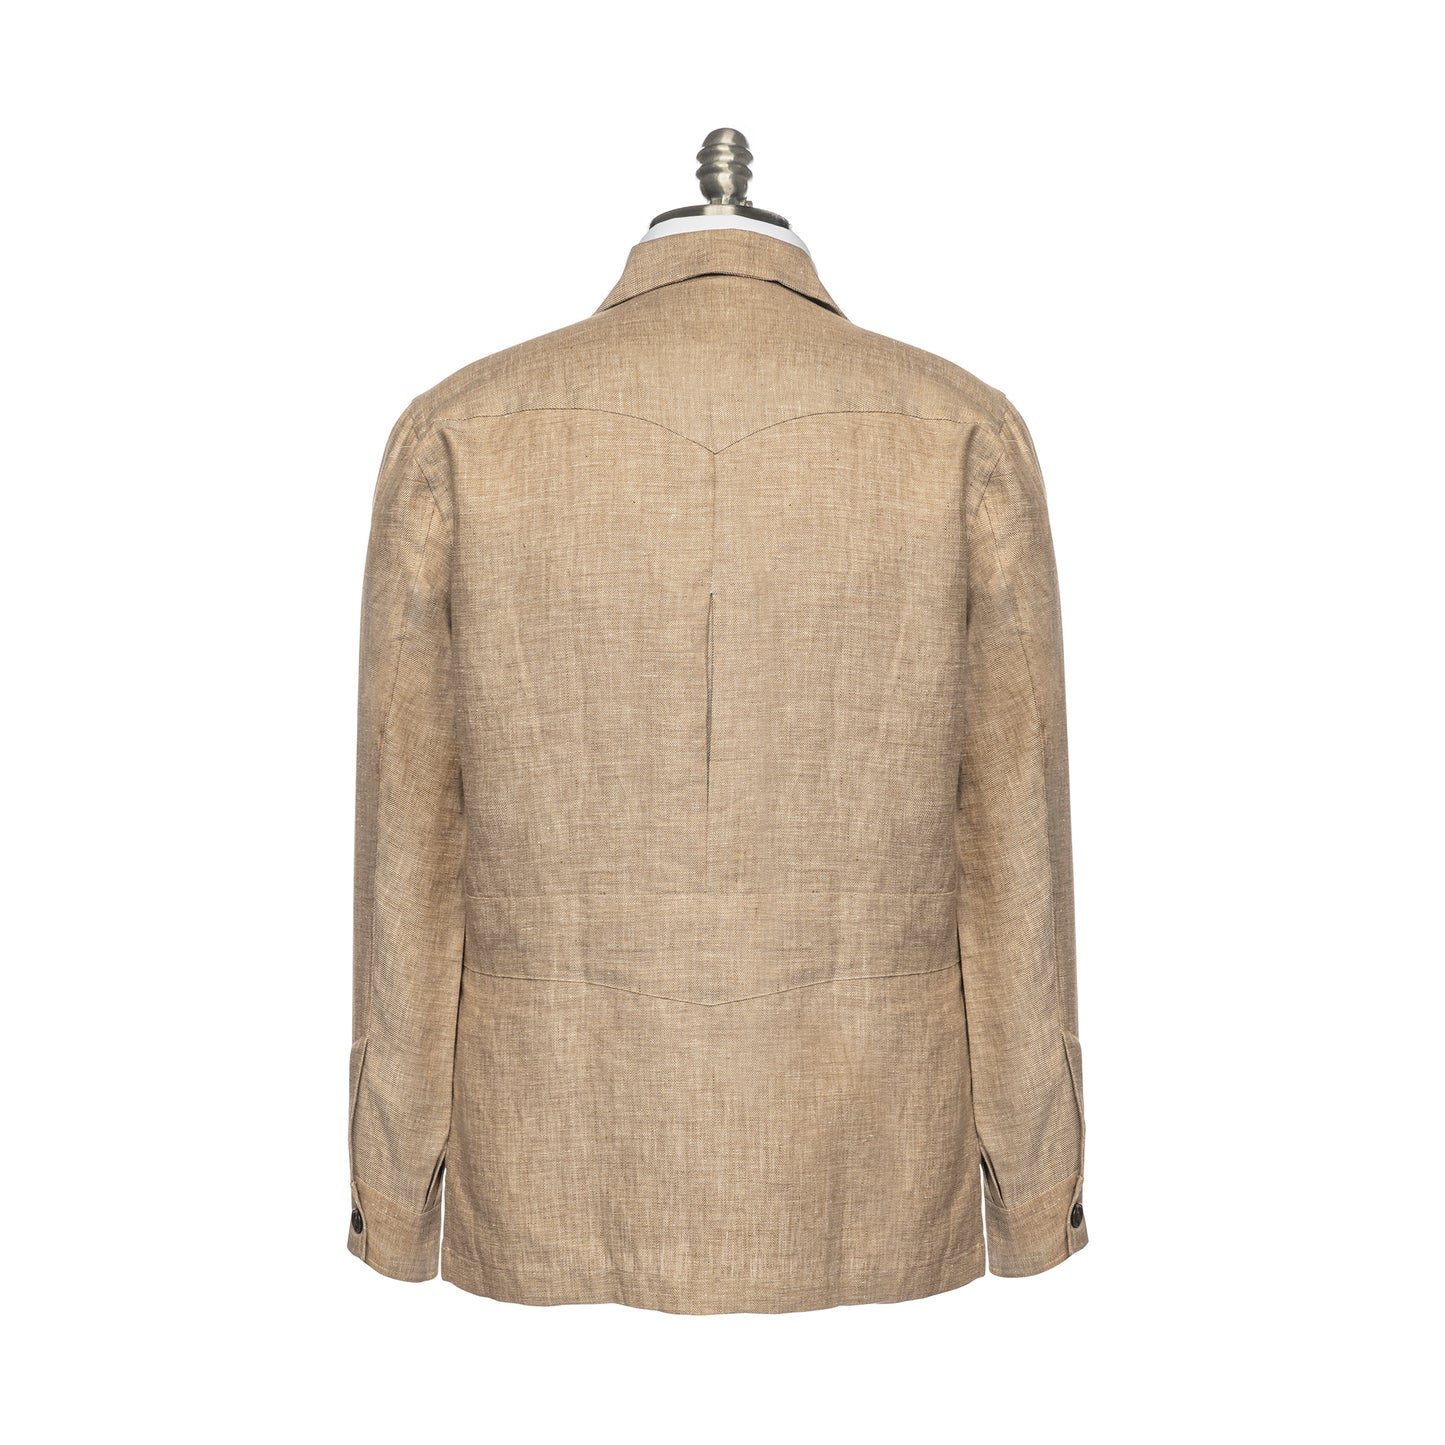 Wheatish Linen Field Jacket for Men